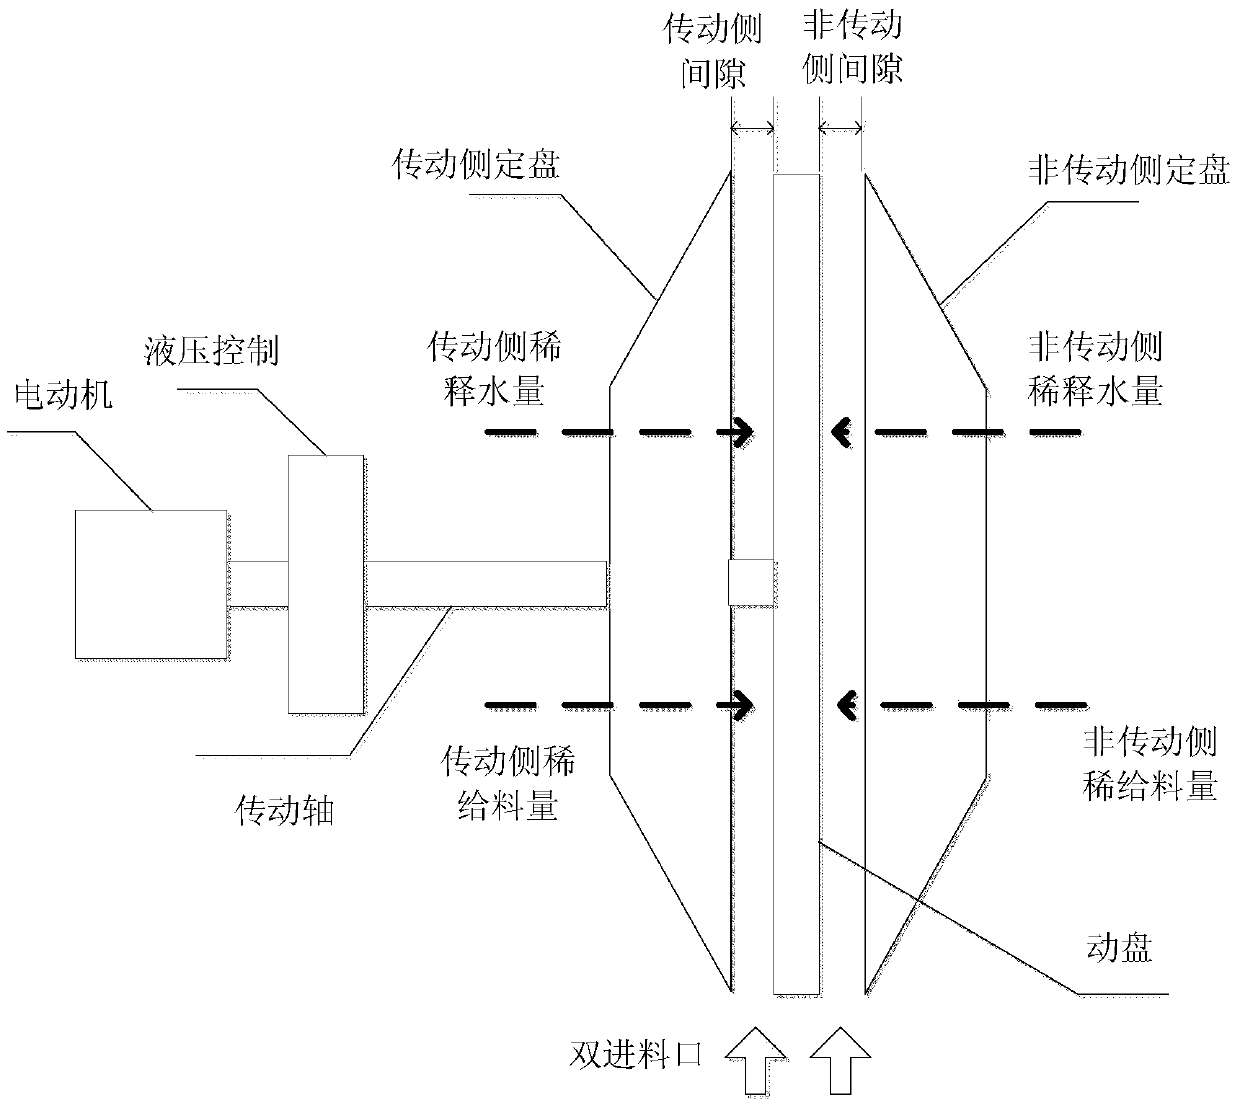 A pdf modeling method for output fiber morphology distribution of high consistency refining system